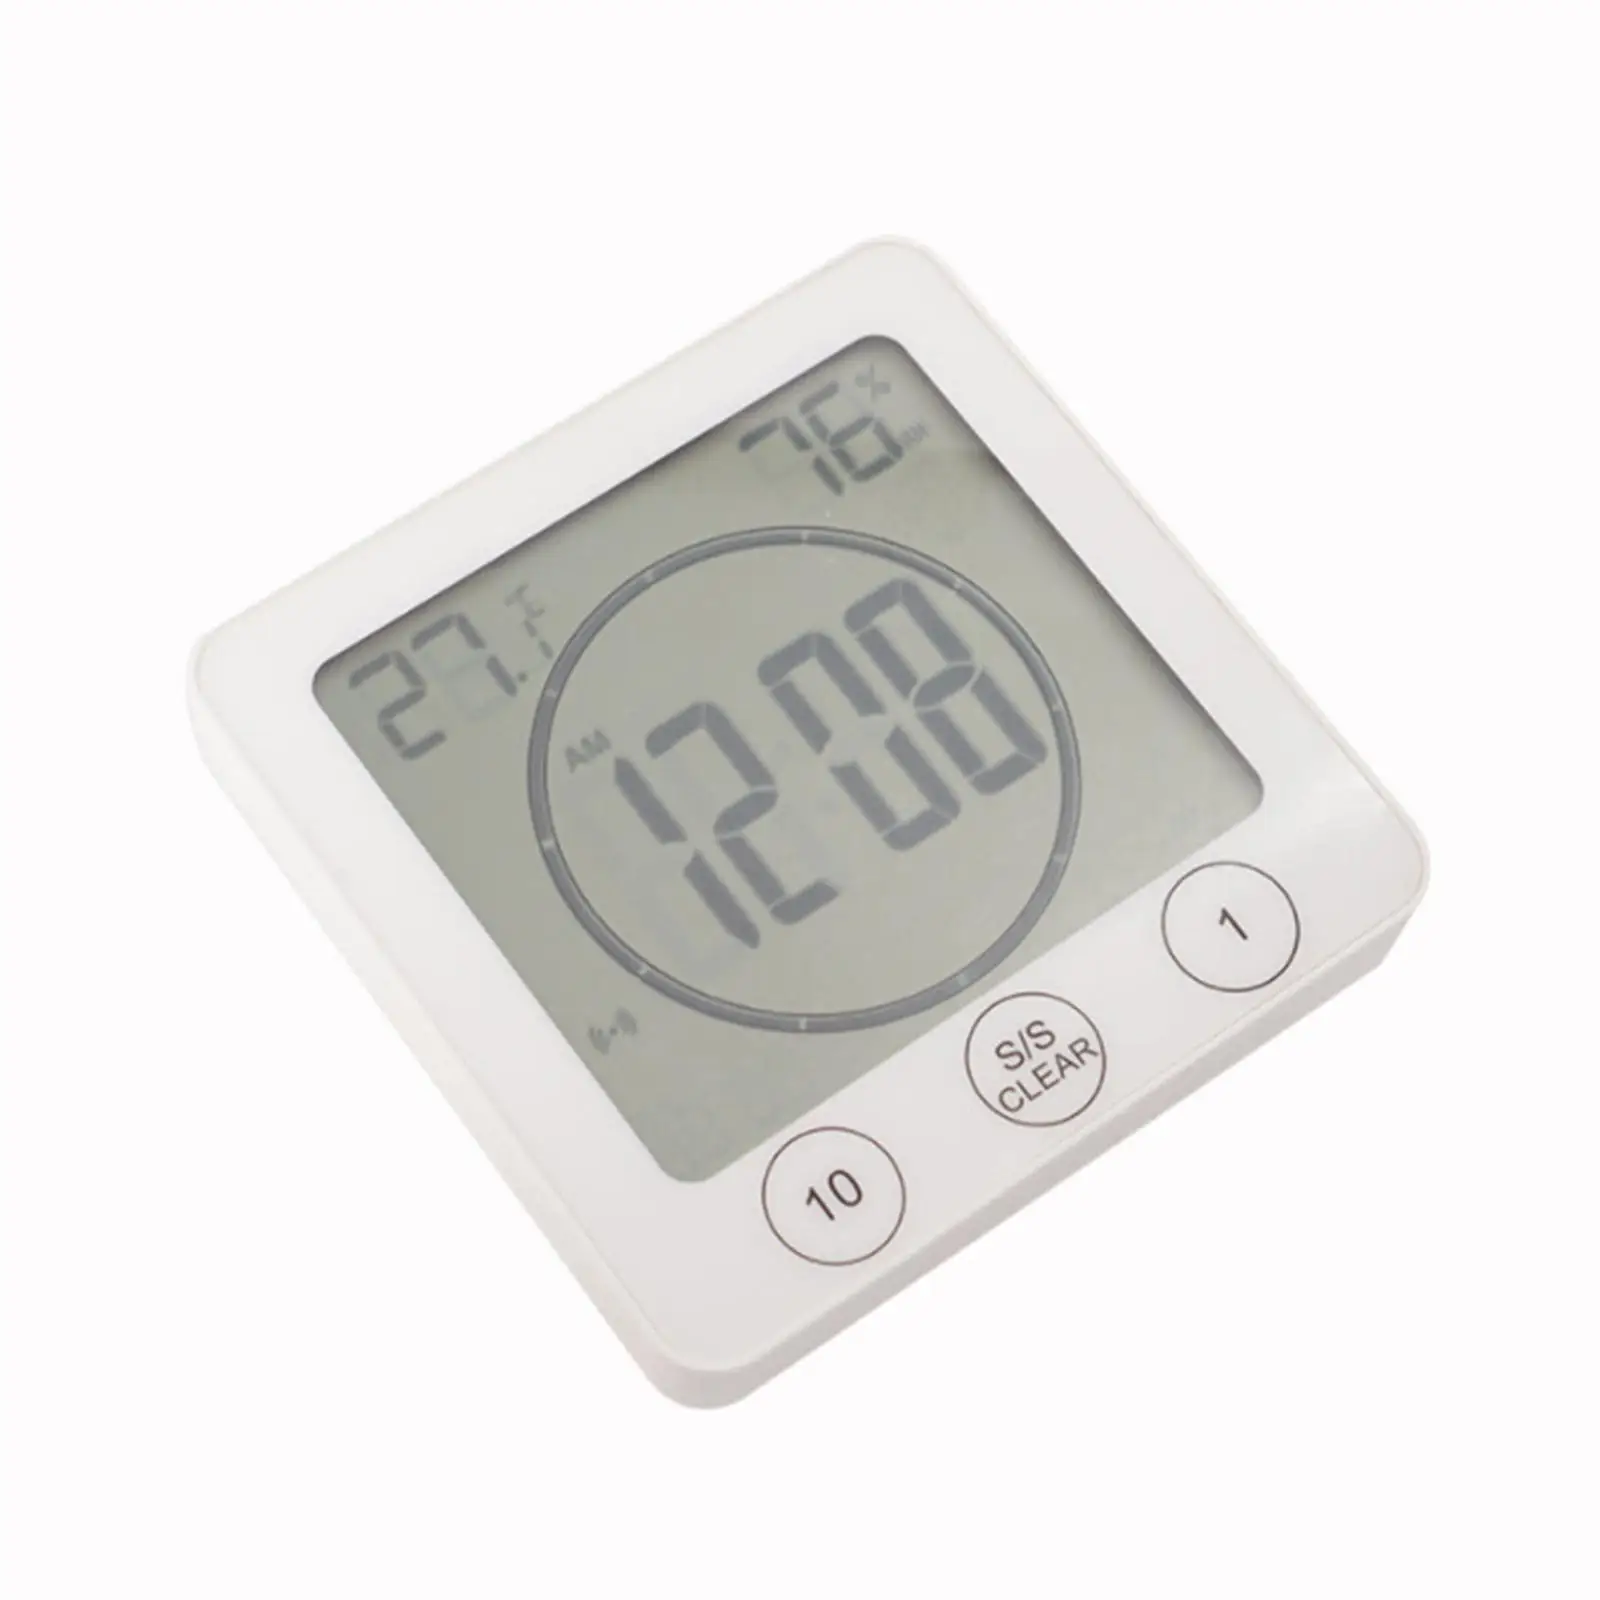 Portable Indoor  Hygrometer Electronic Multifunctional Easy Using Universal Digital Display Mini Humidity Temperature